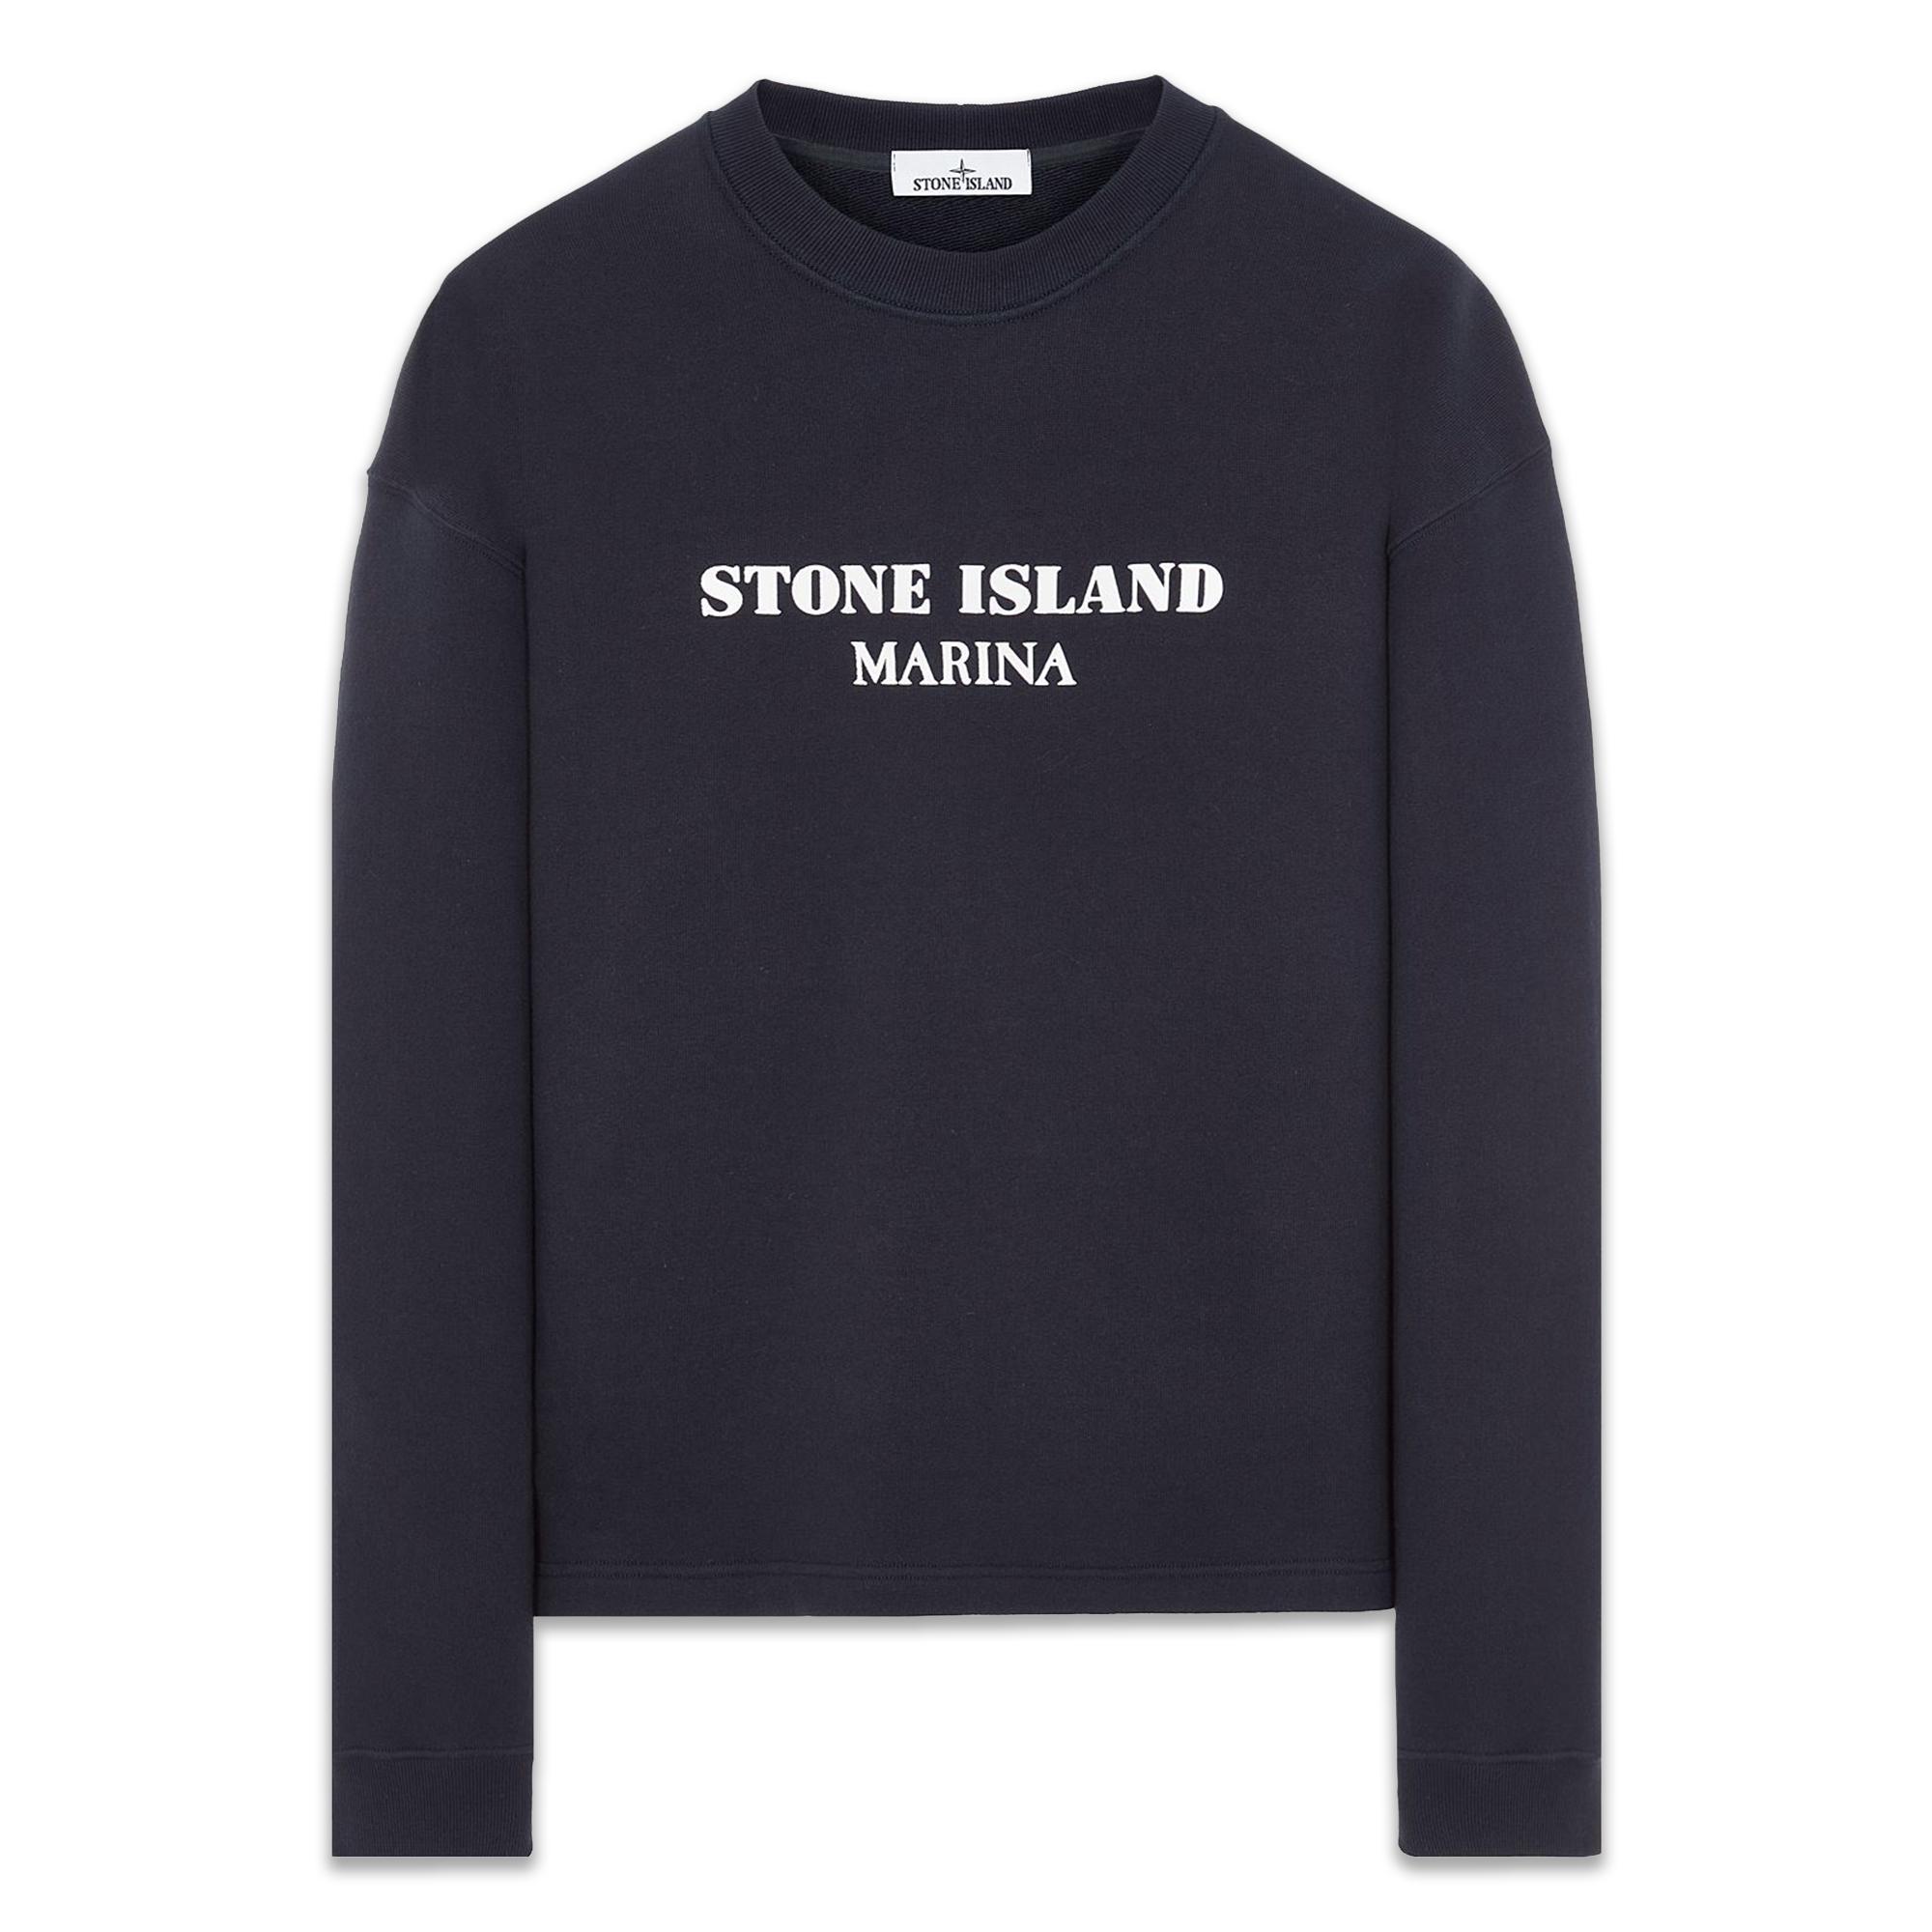 Stone Island Marina Fleece Sweatshirt - Fairchild Fashion 